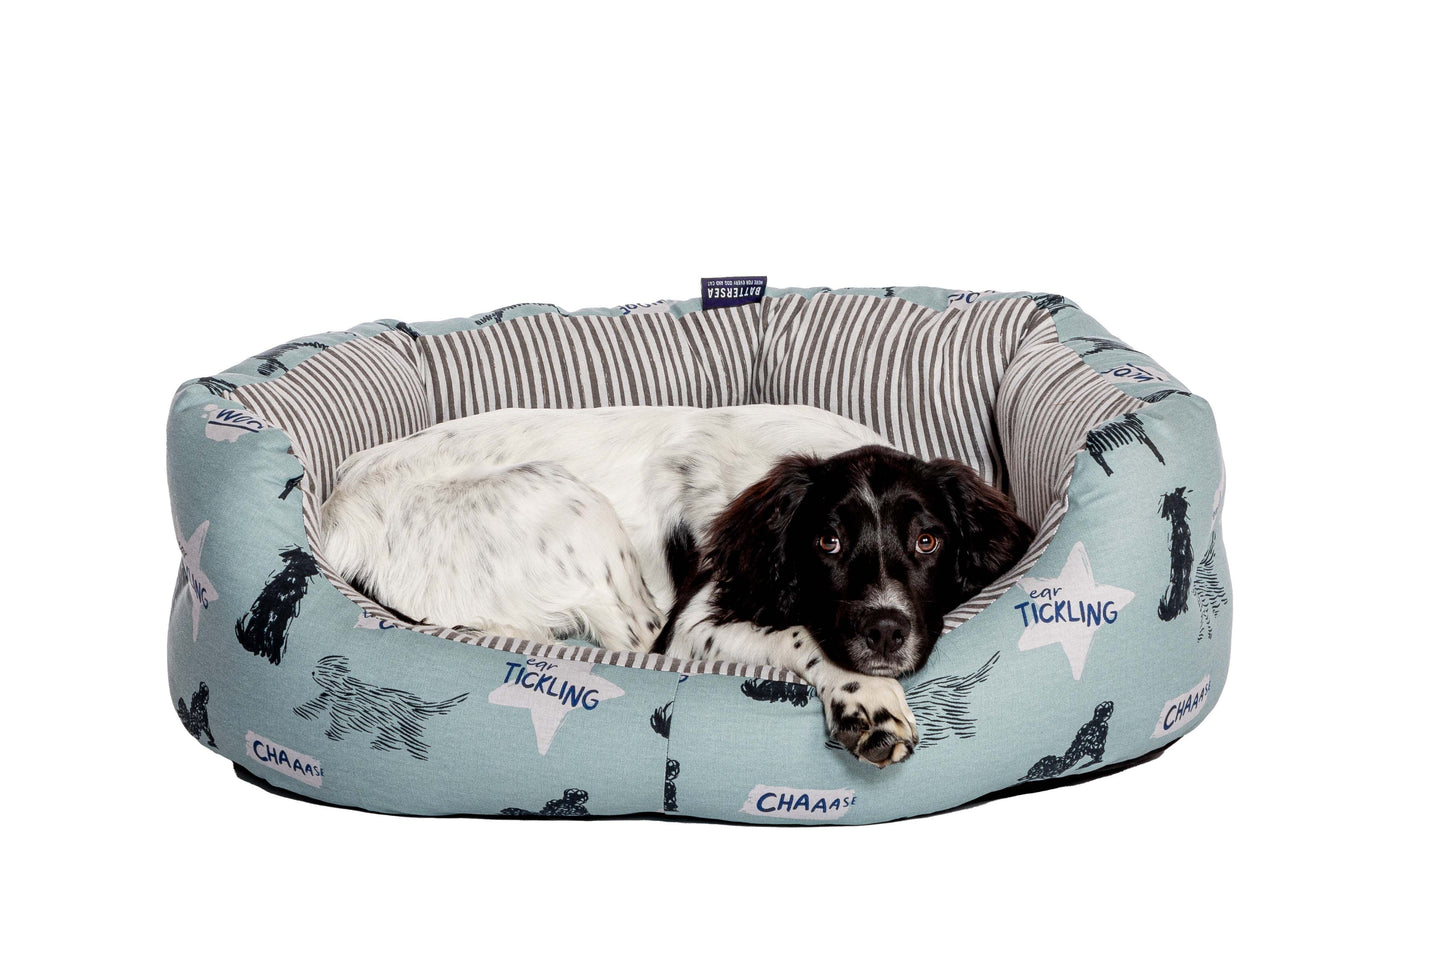 Battersea Playful Dogs Deluxe Slumber Bed